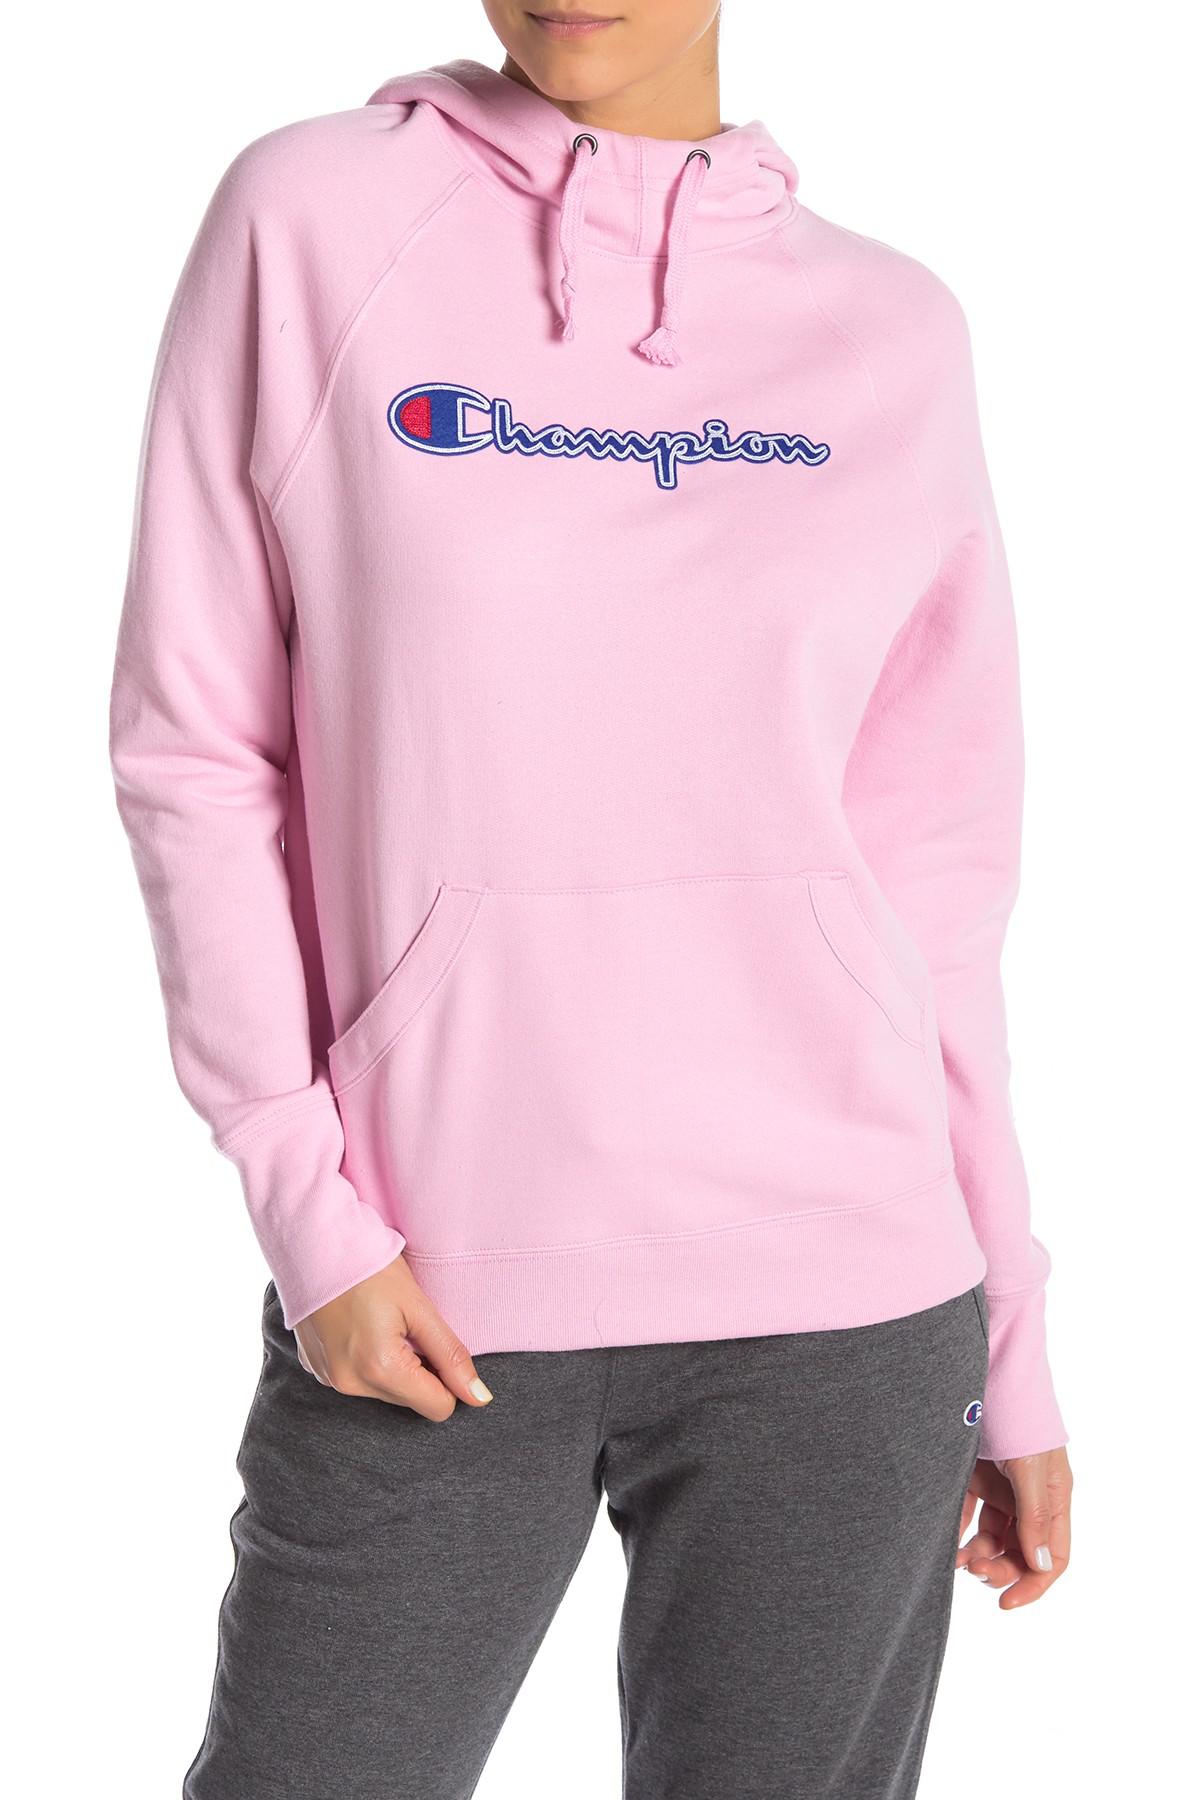 champion powerblend sweatshirt